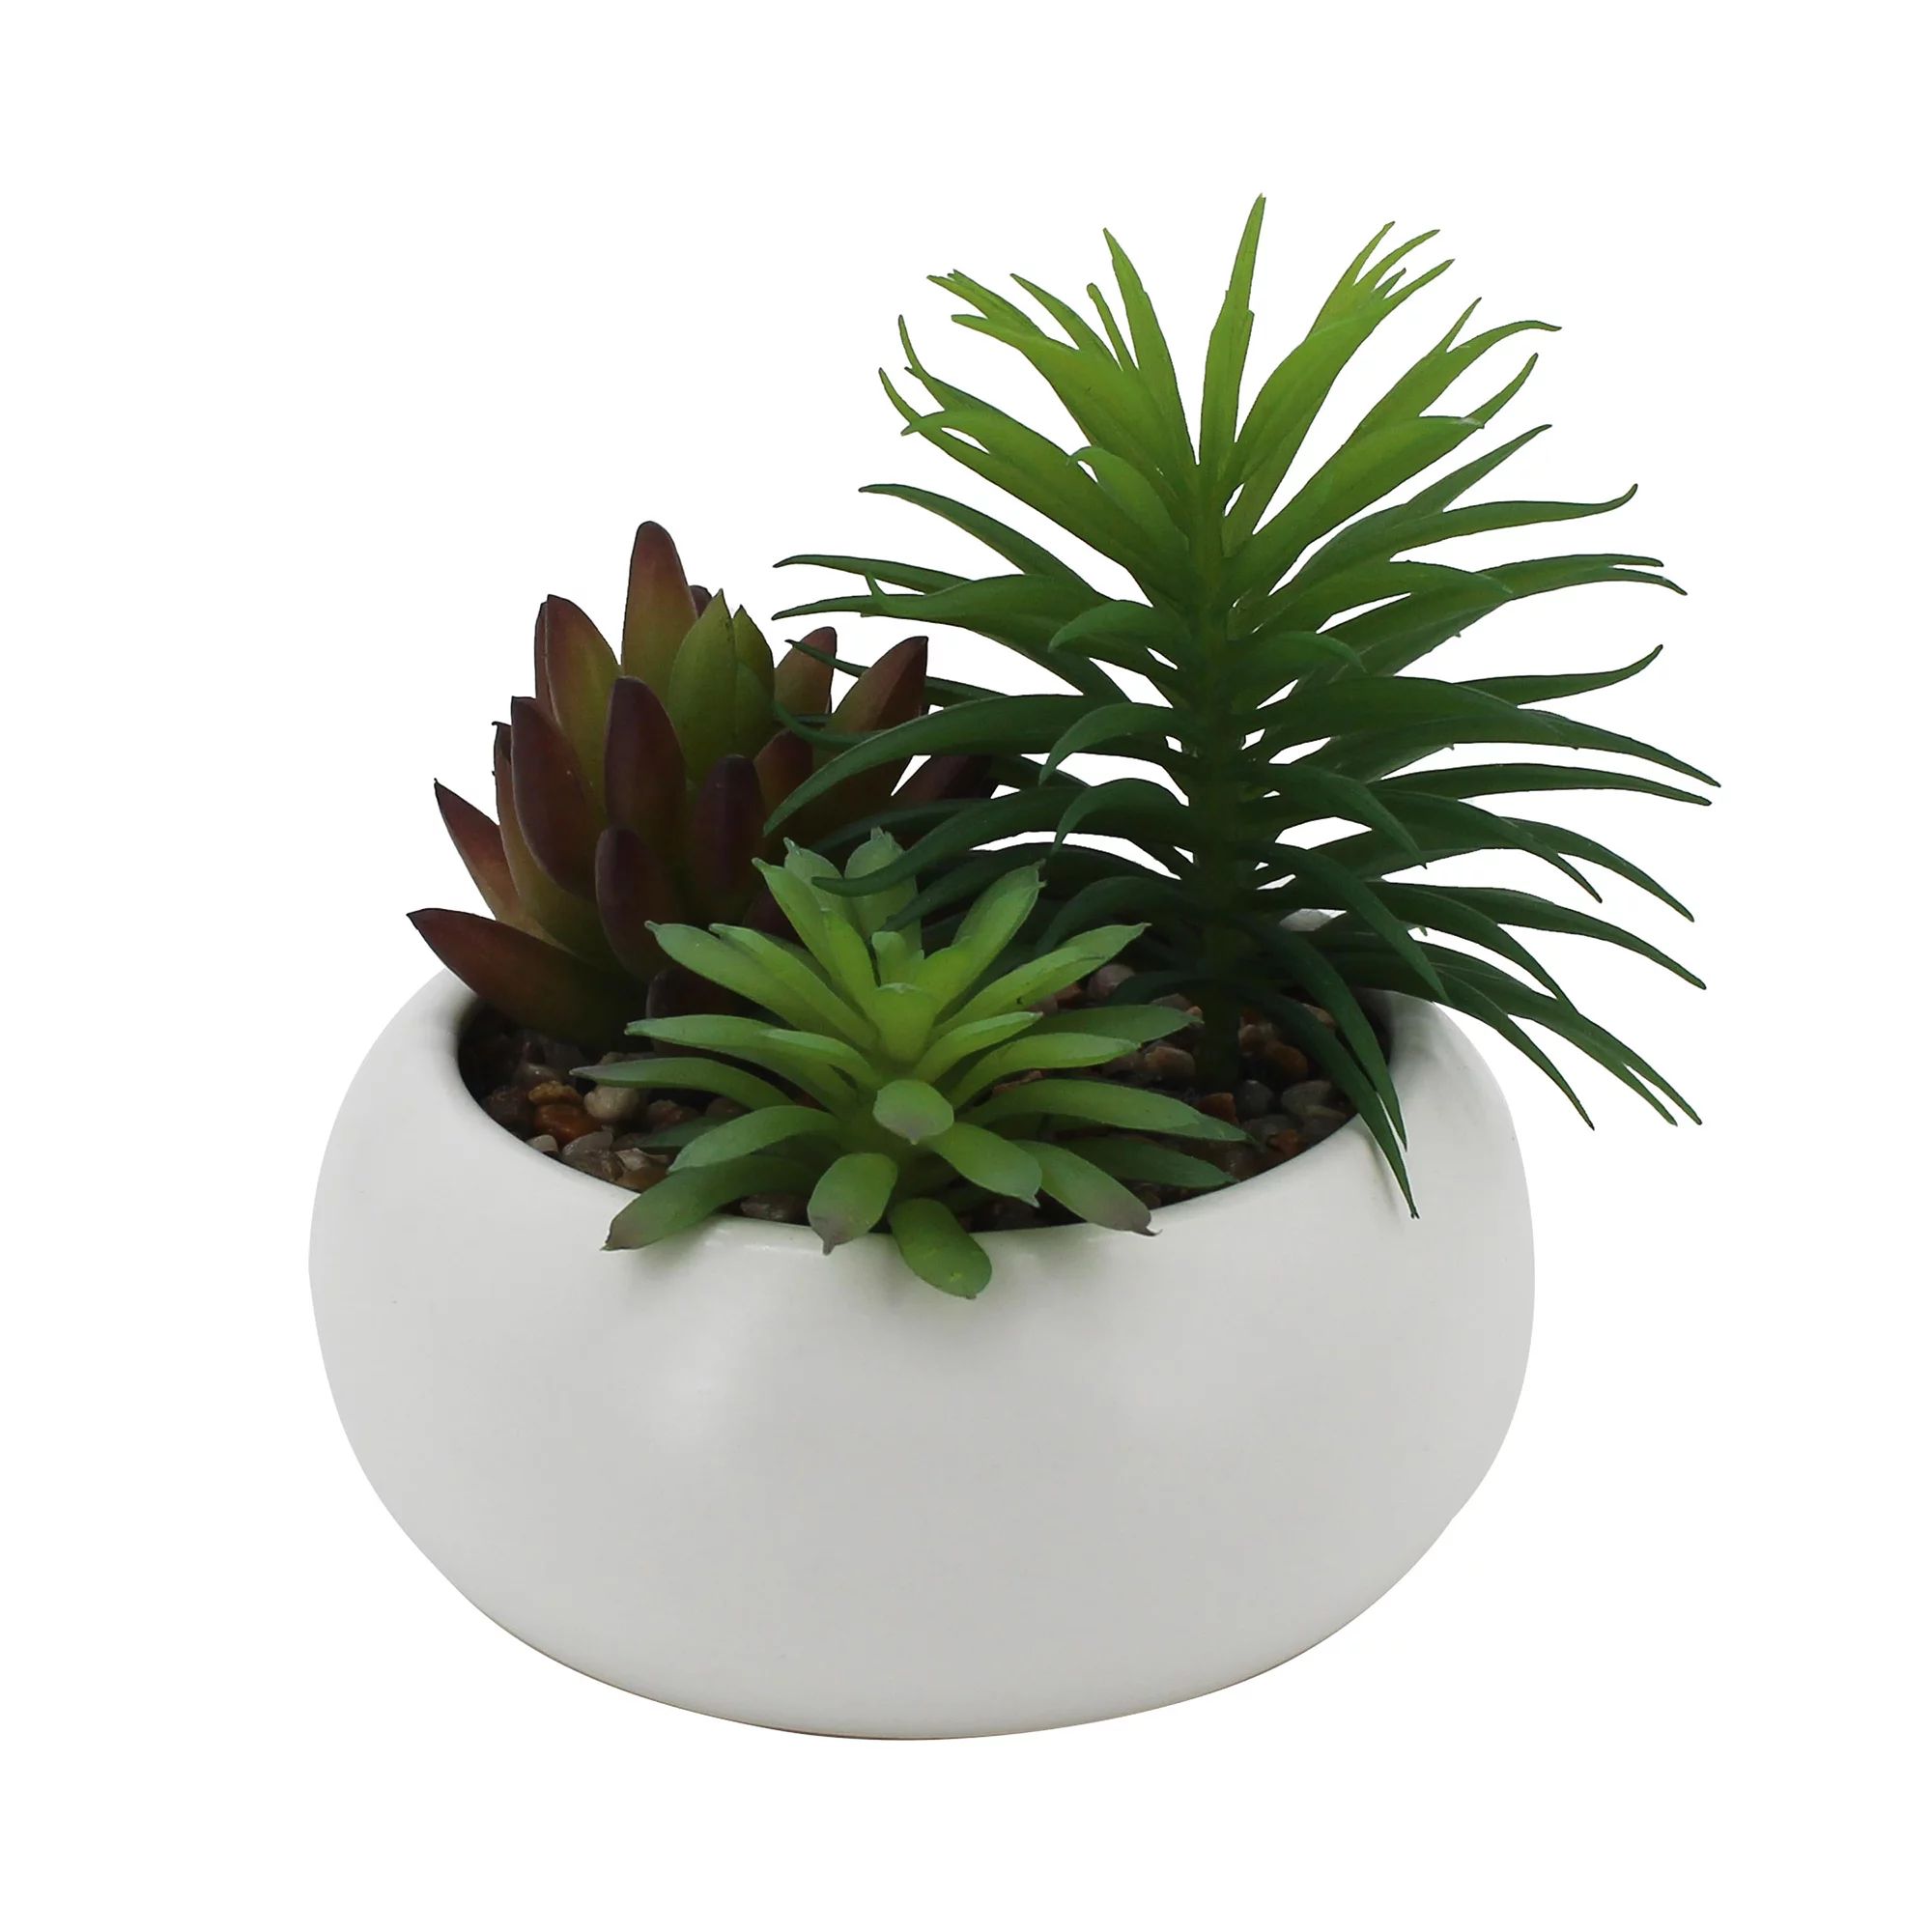 Mainstays 4.75" Succulent Arrangement in White Ceramic Planter, Green | Walmart (US)